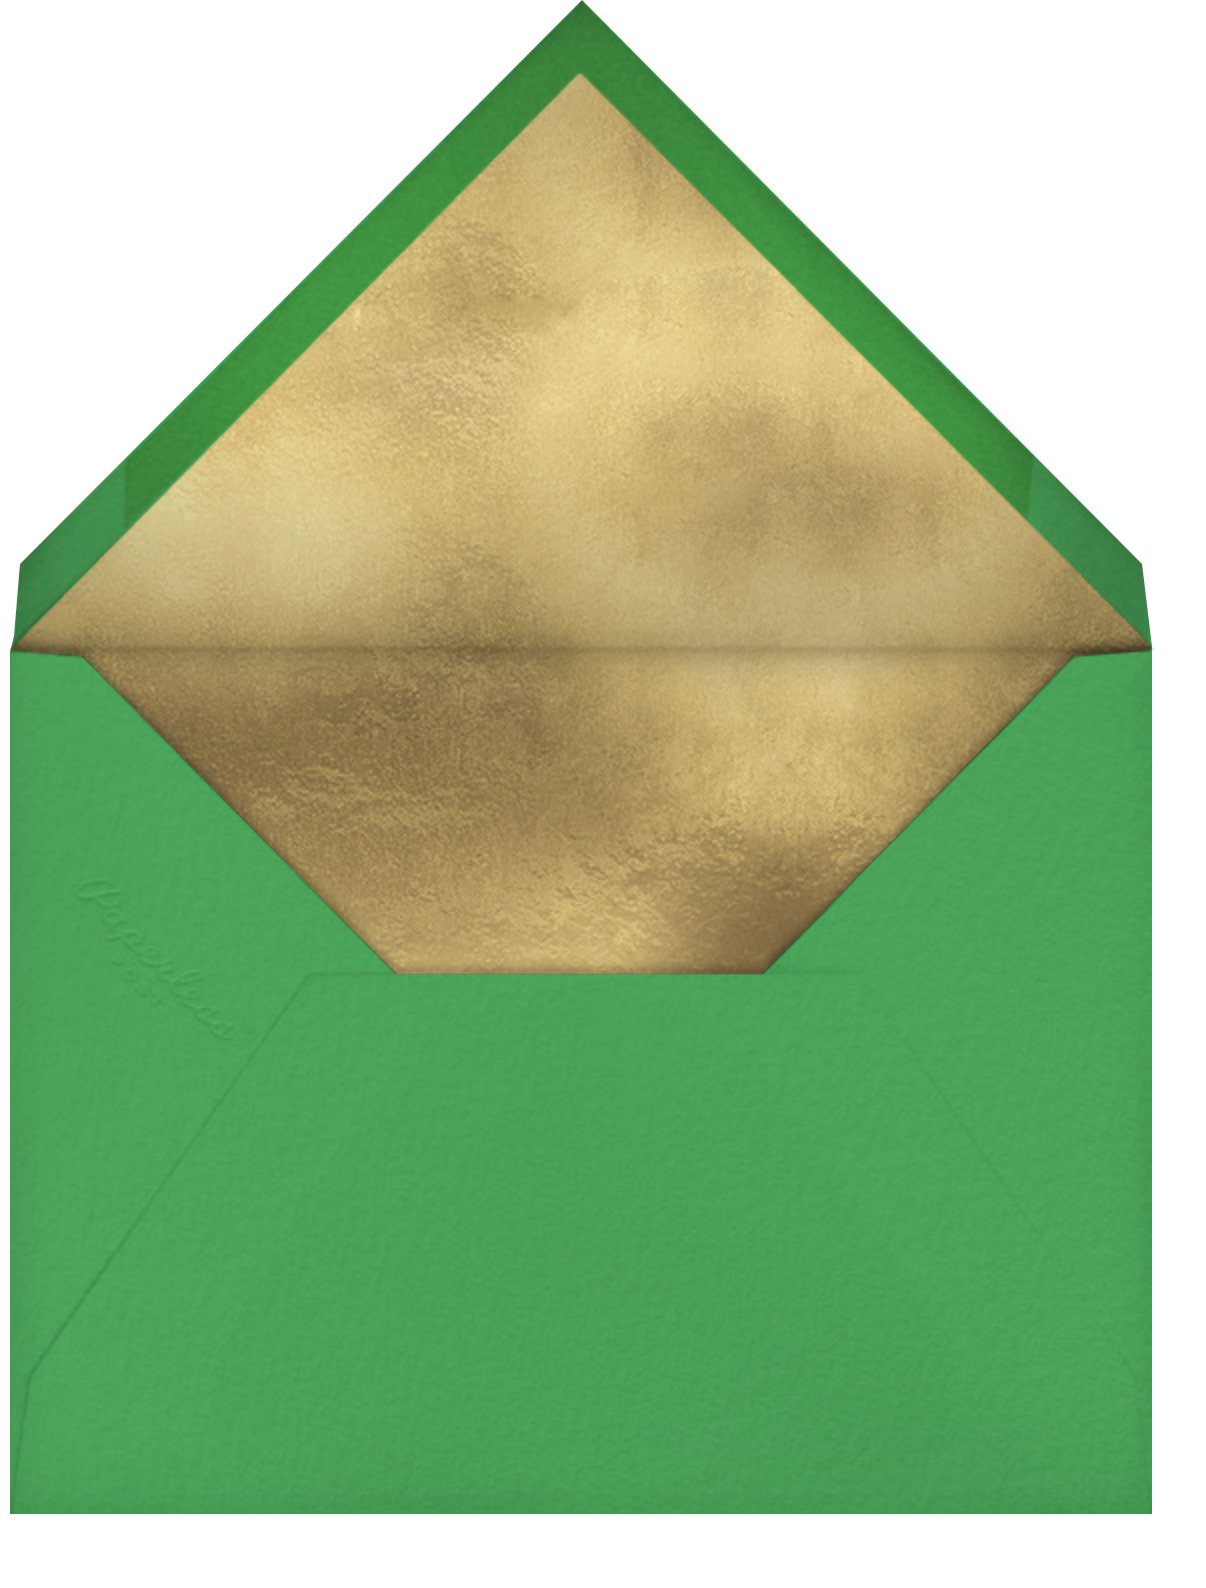 Wrapping Paper - Maraschino - kate spade new york - Envelope